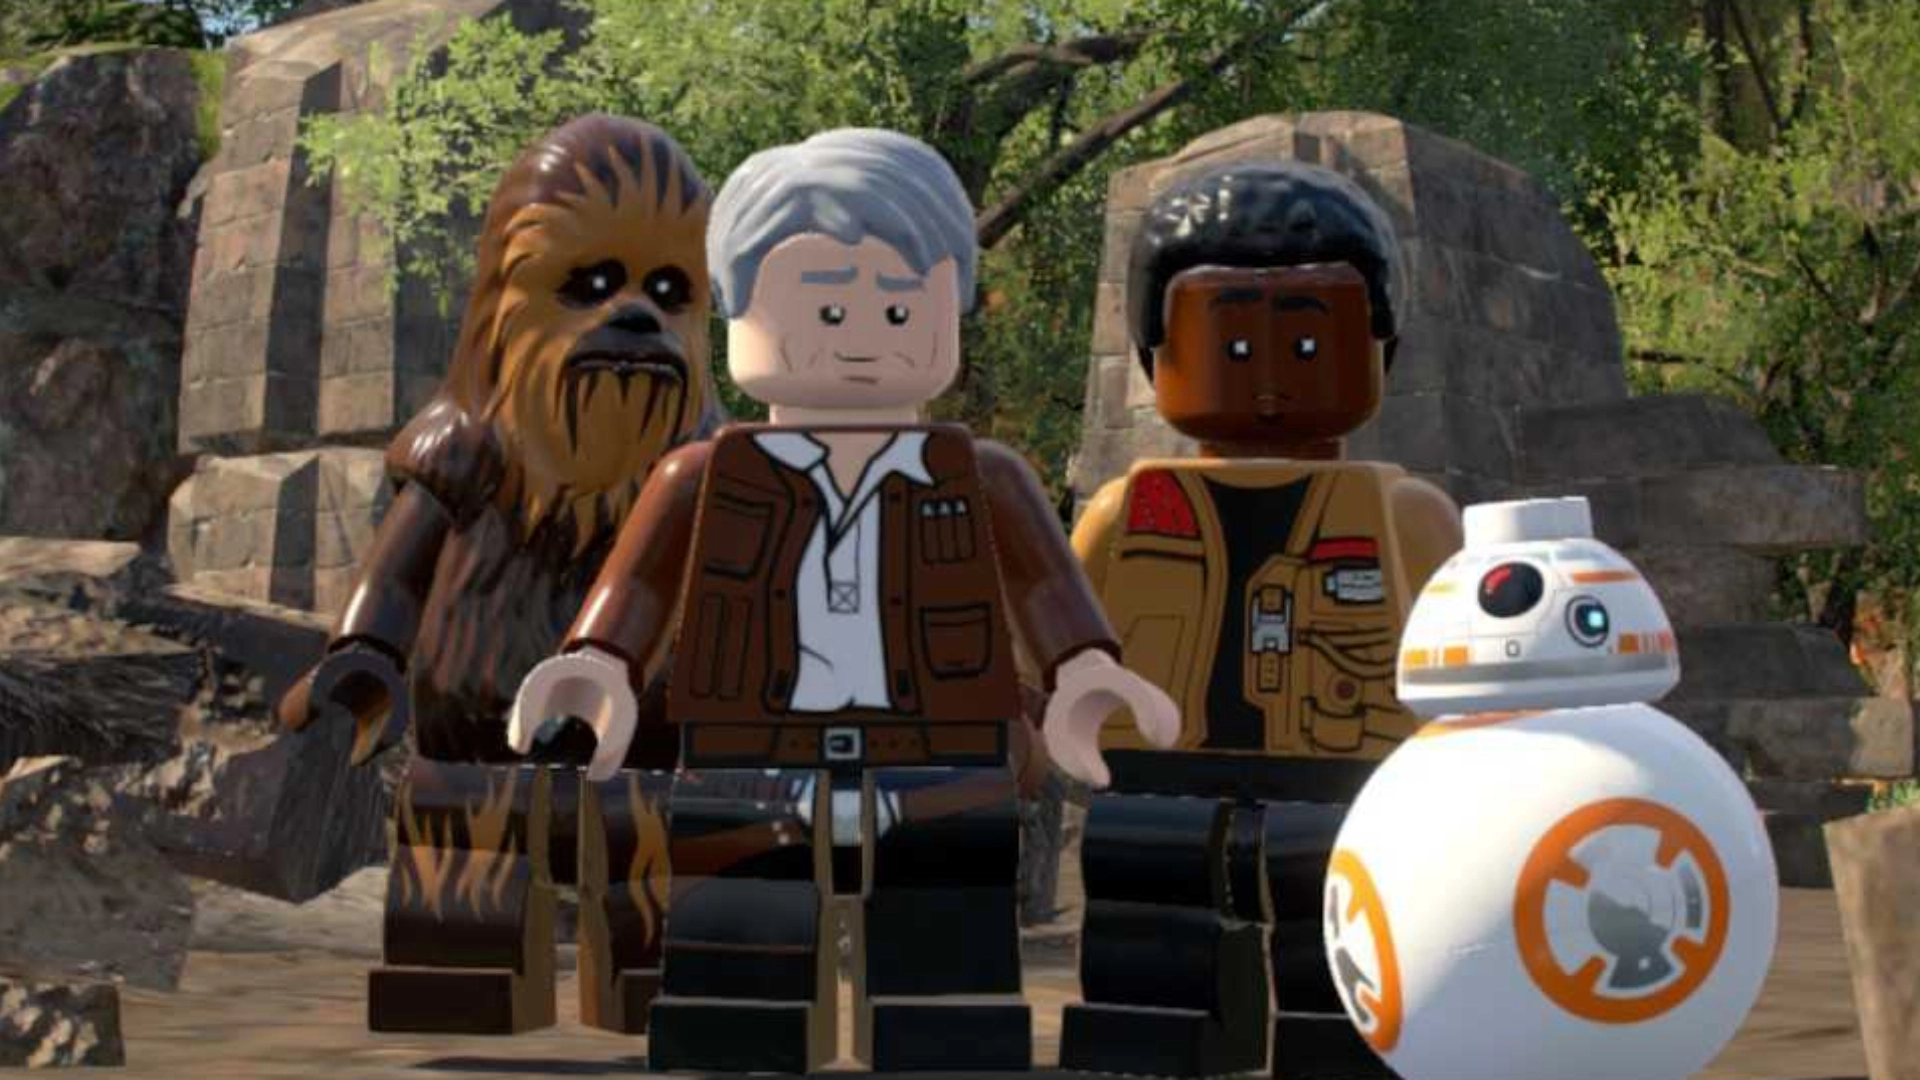 How to Unlock Glider in Lego Star Wars The Skywalker Saga